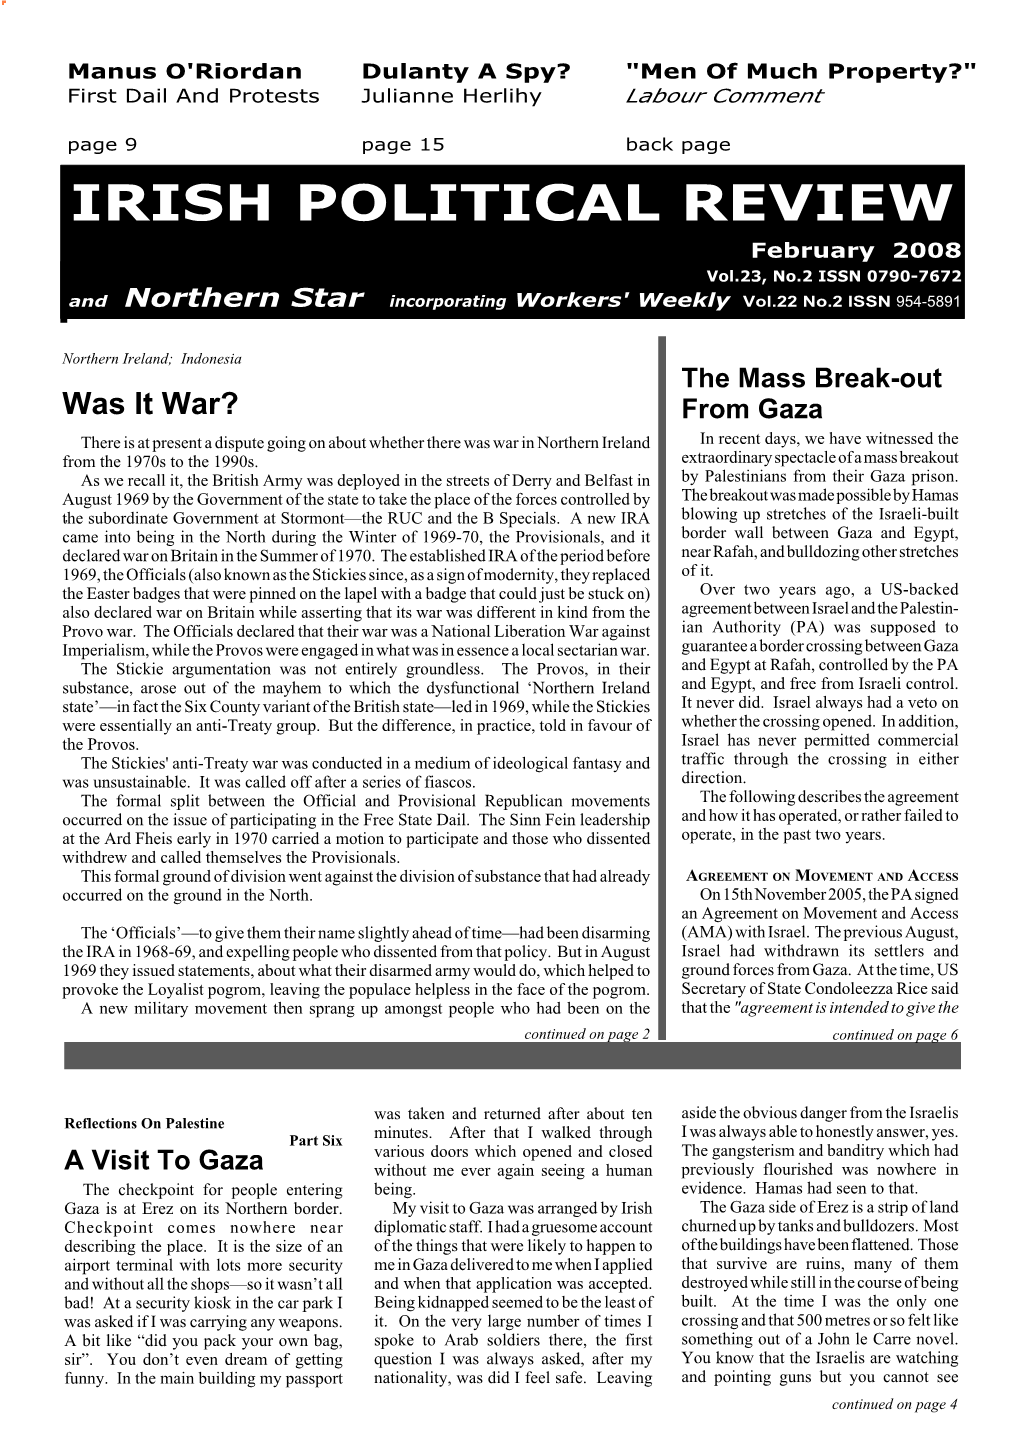 Irish Political Review, February 2008